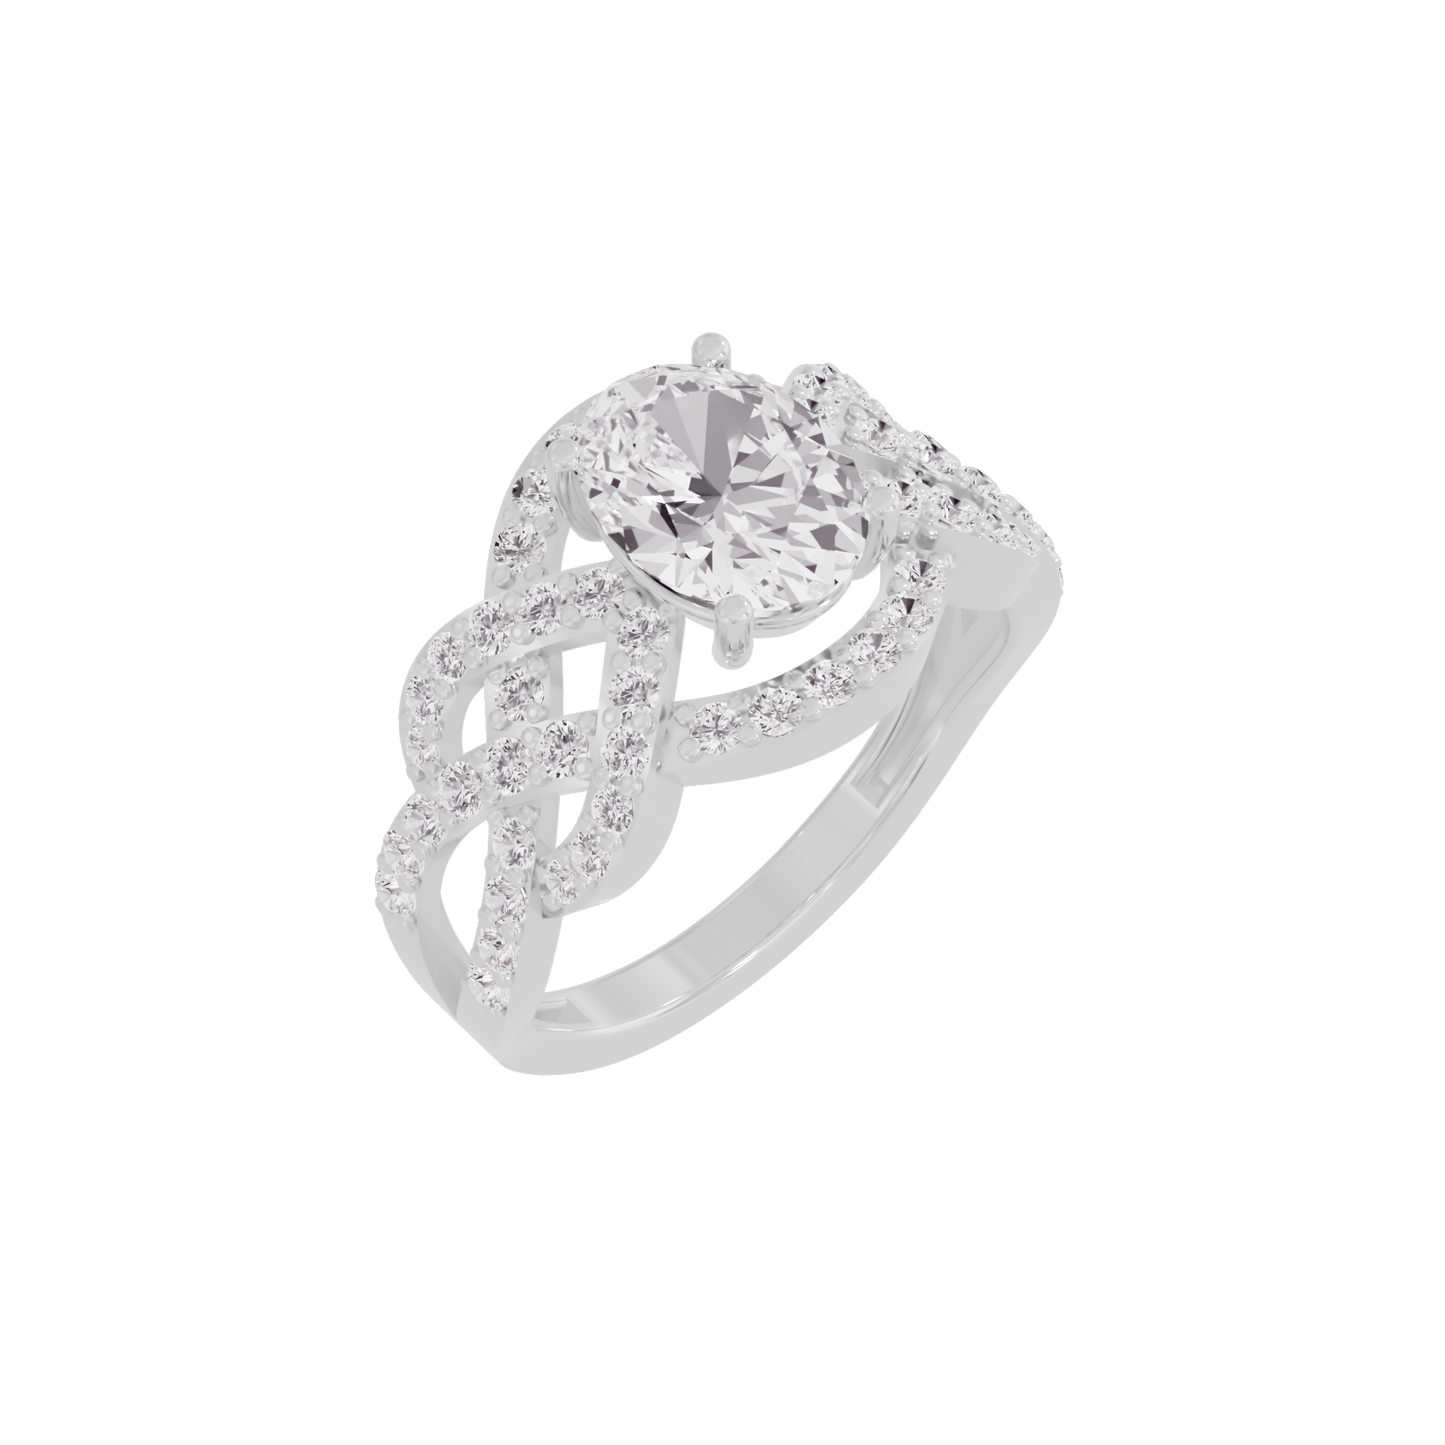 Moonstone Rhapsody Diamond Ring